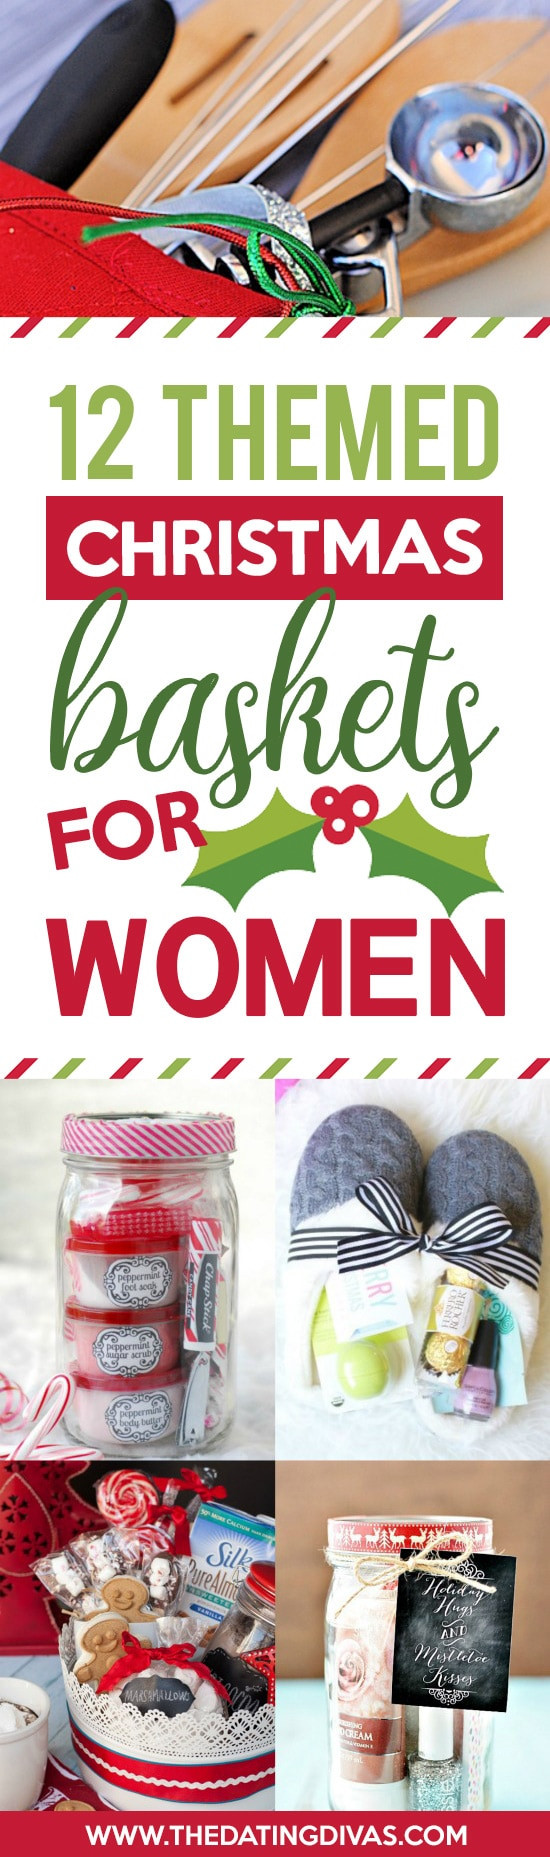 Homemade Gift Basket Ideas For Women
 50 Themed Christmas Basket Ideas The Dating Divas